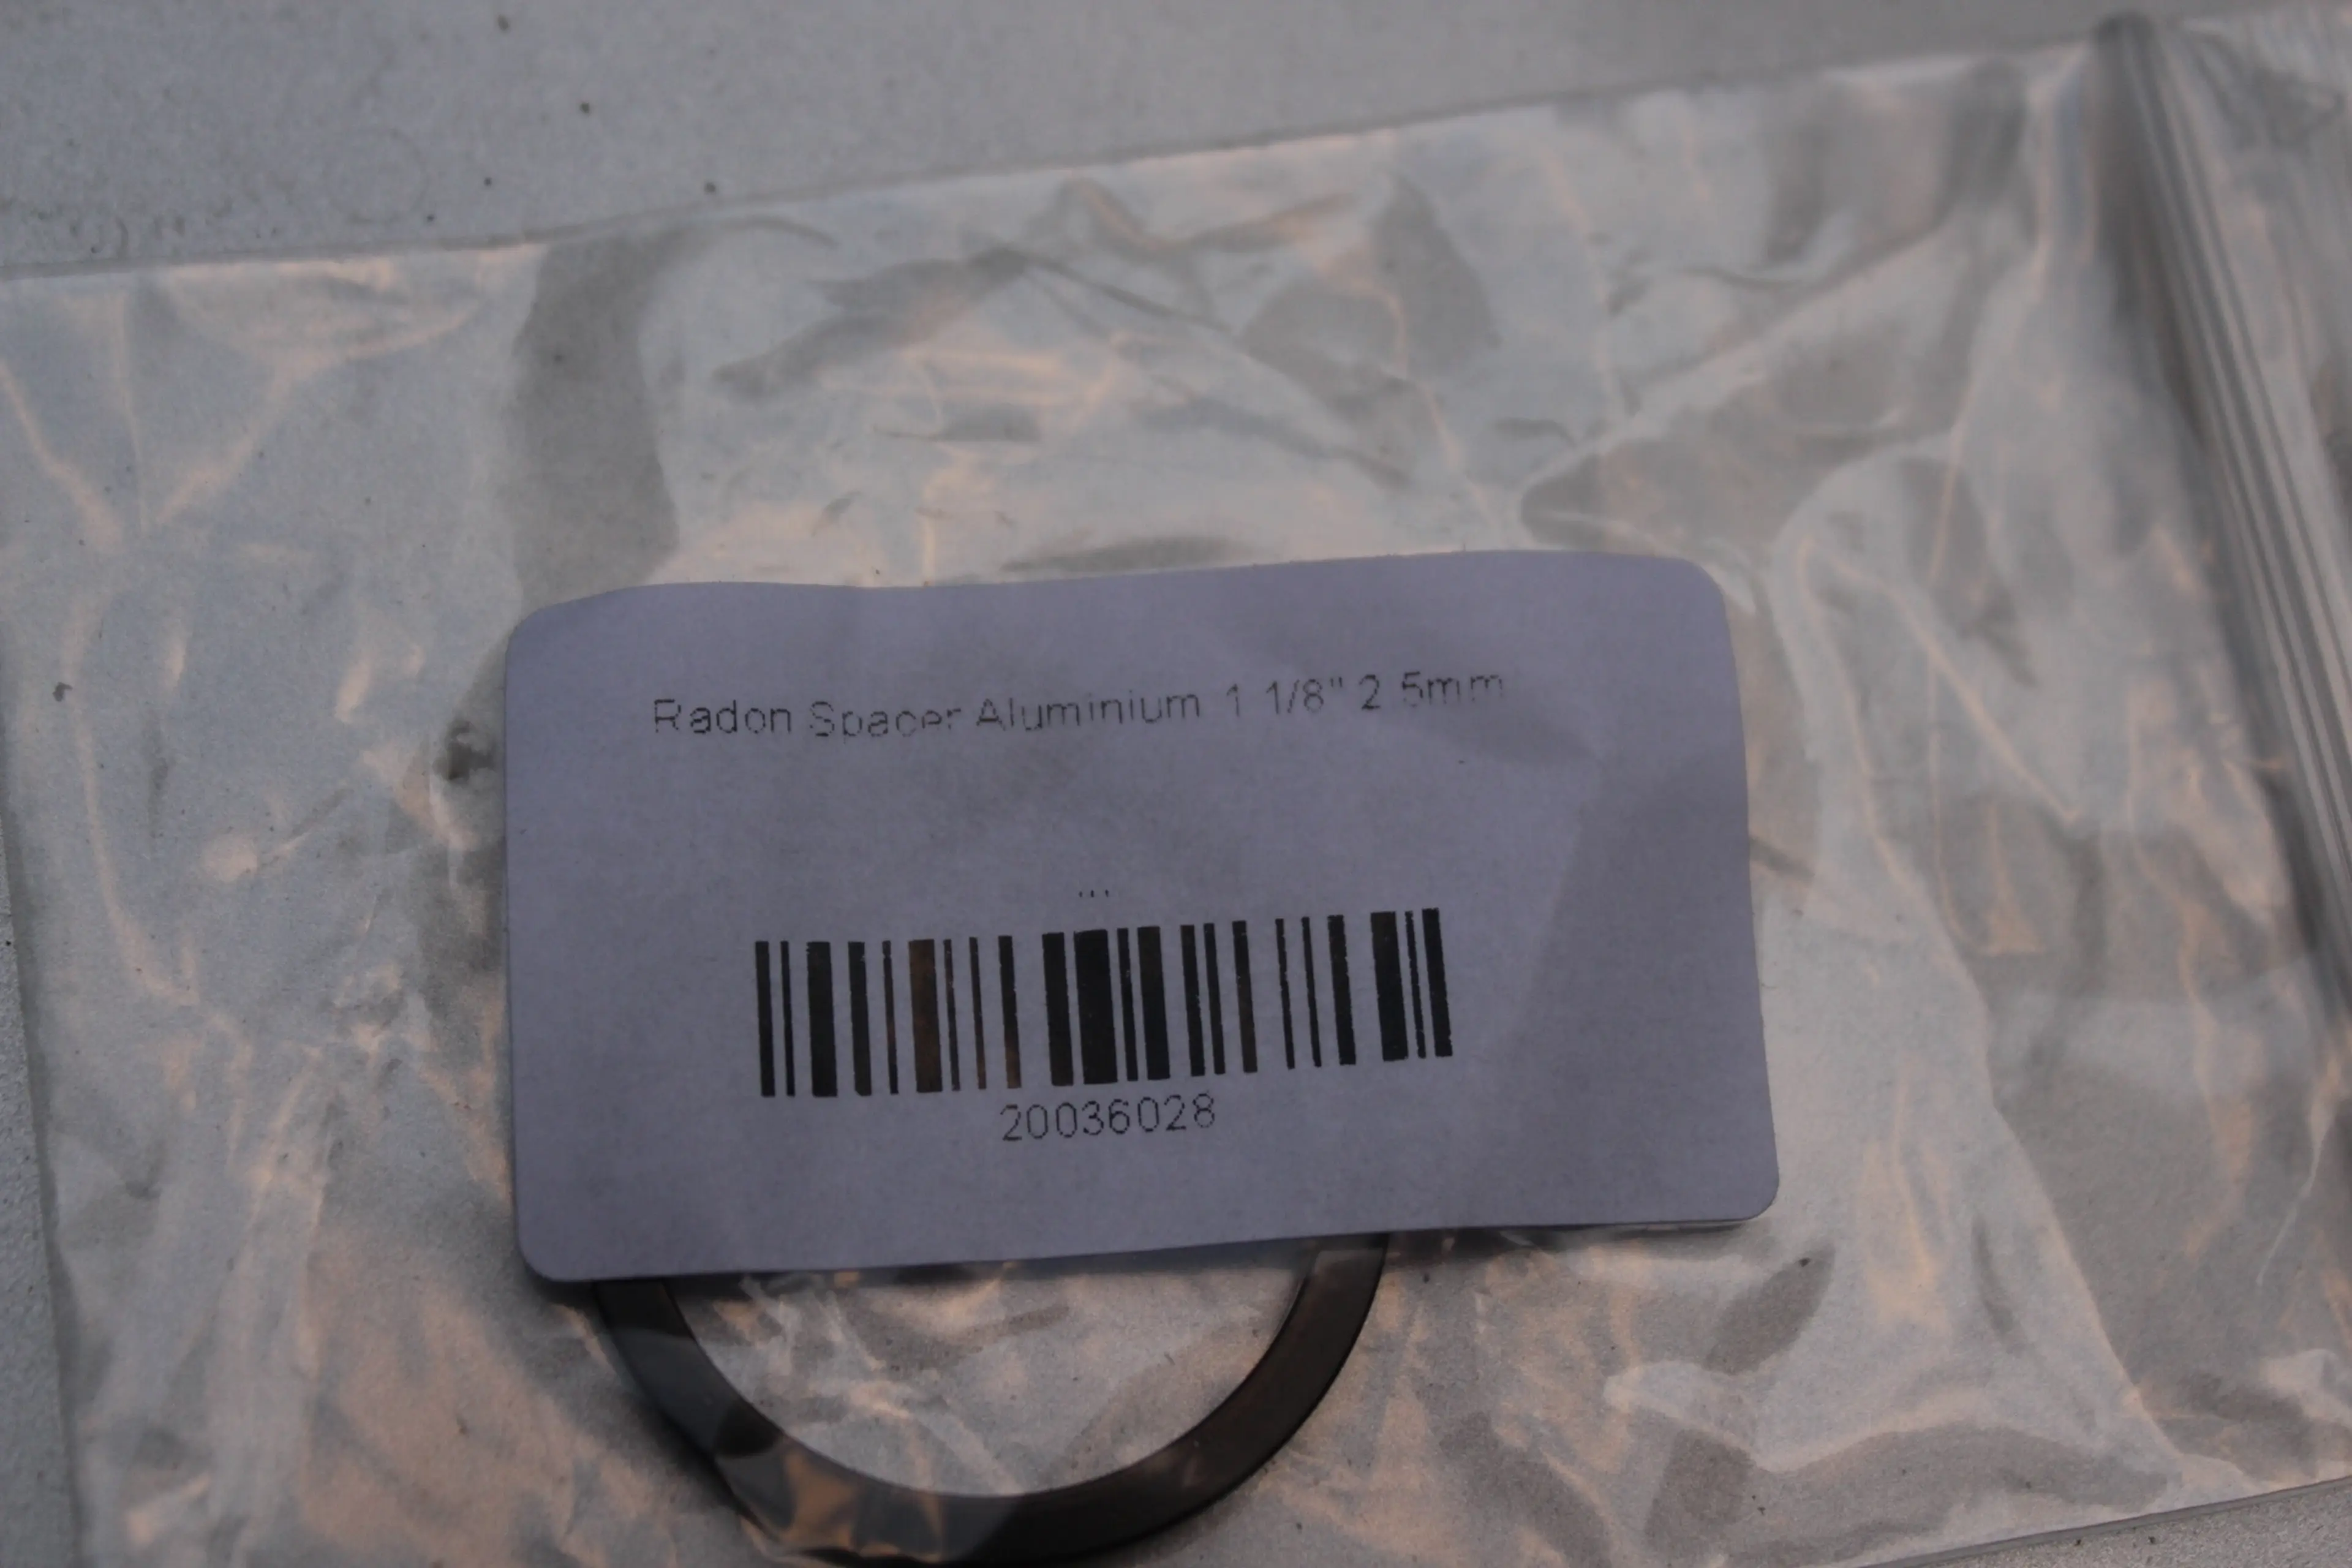 2. Radon 2.5mm headset spacer aluminiu - 1.1/8"